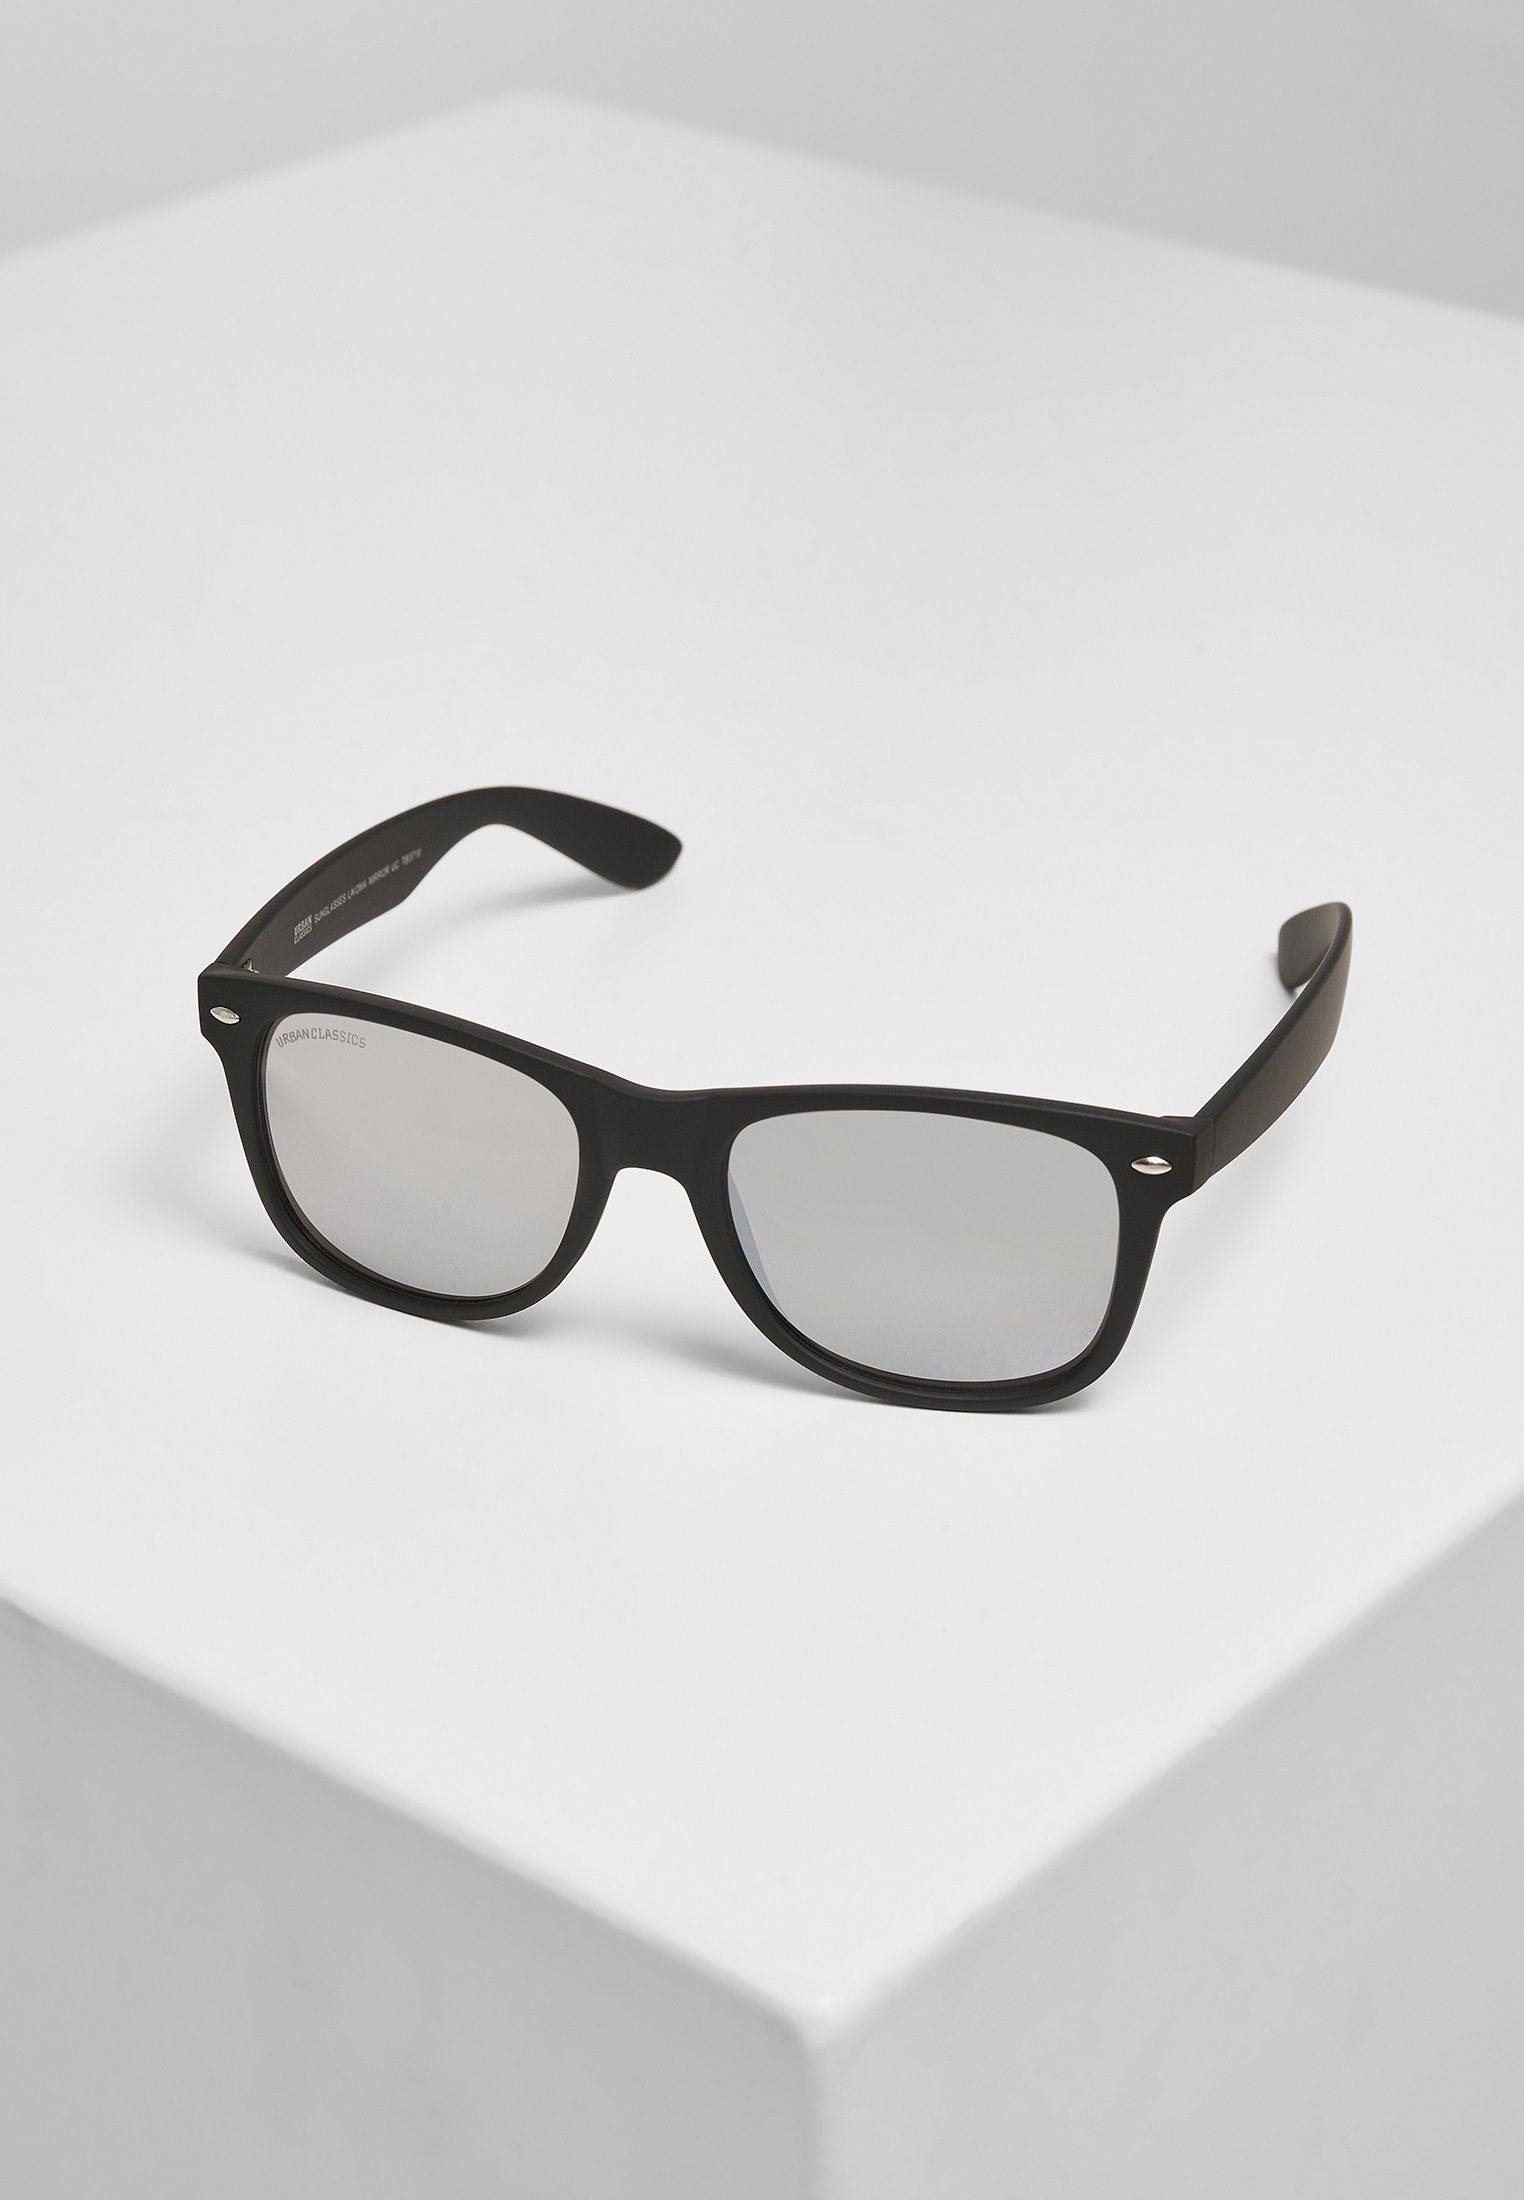 UC Sonnenbrille Mirror black/silver URBAN Likoma Sunglasses CLASSICS Accessoires